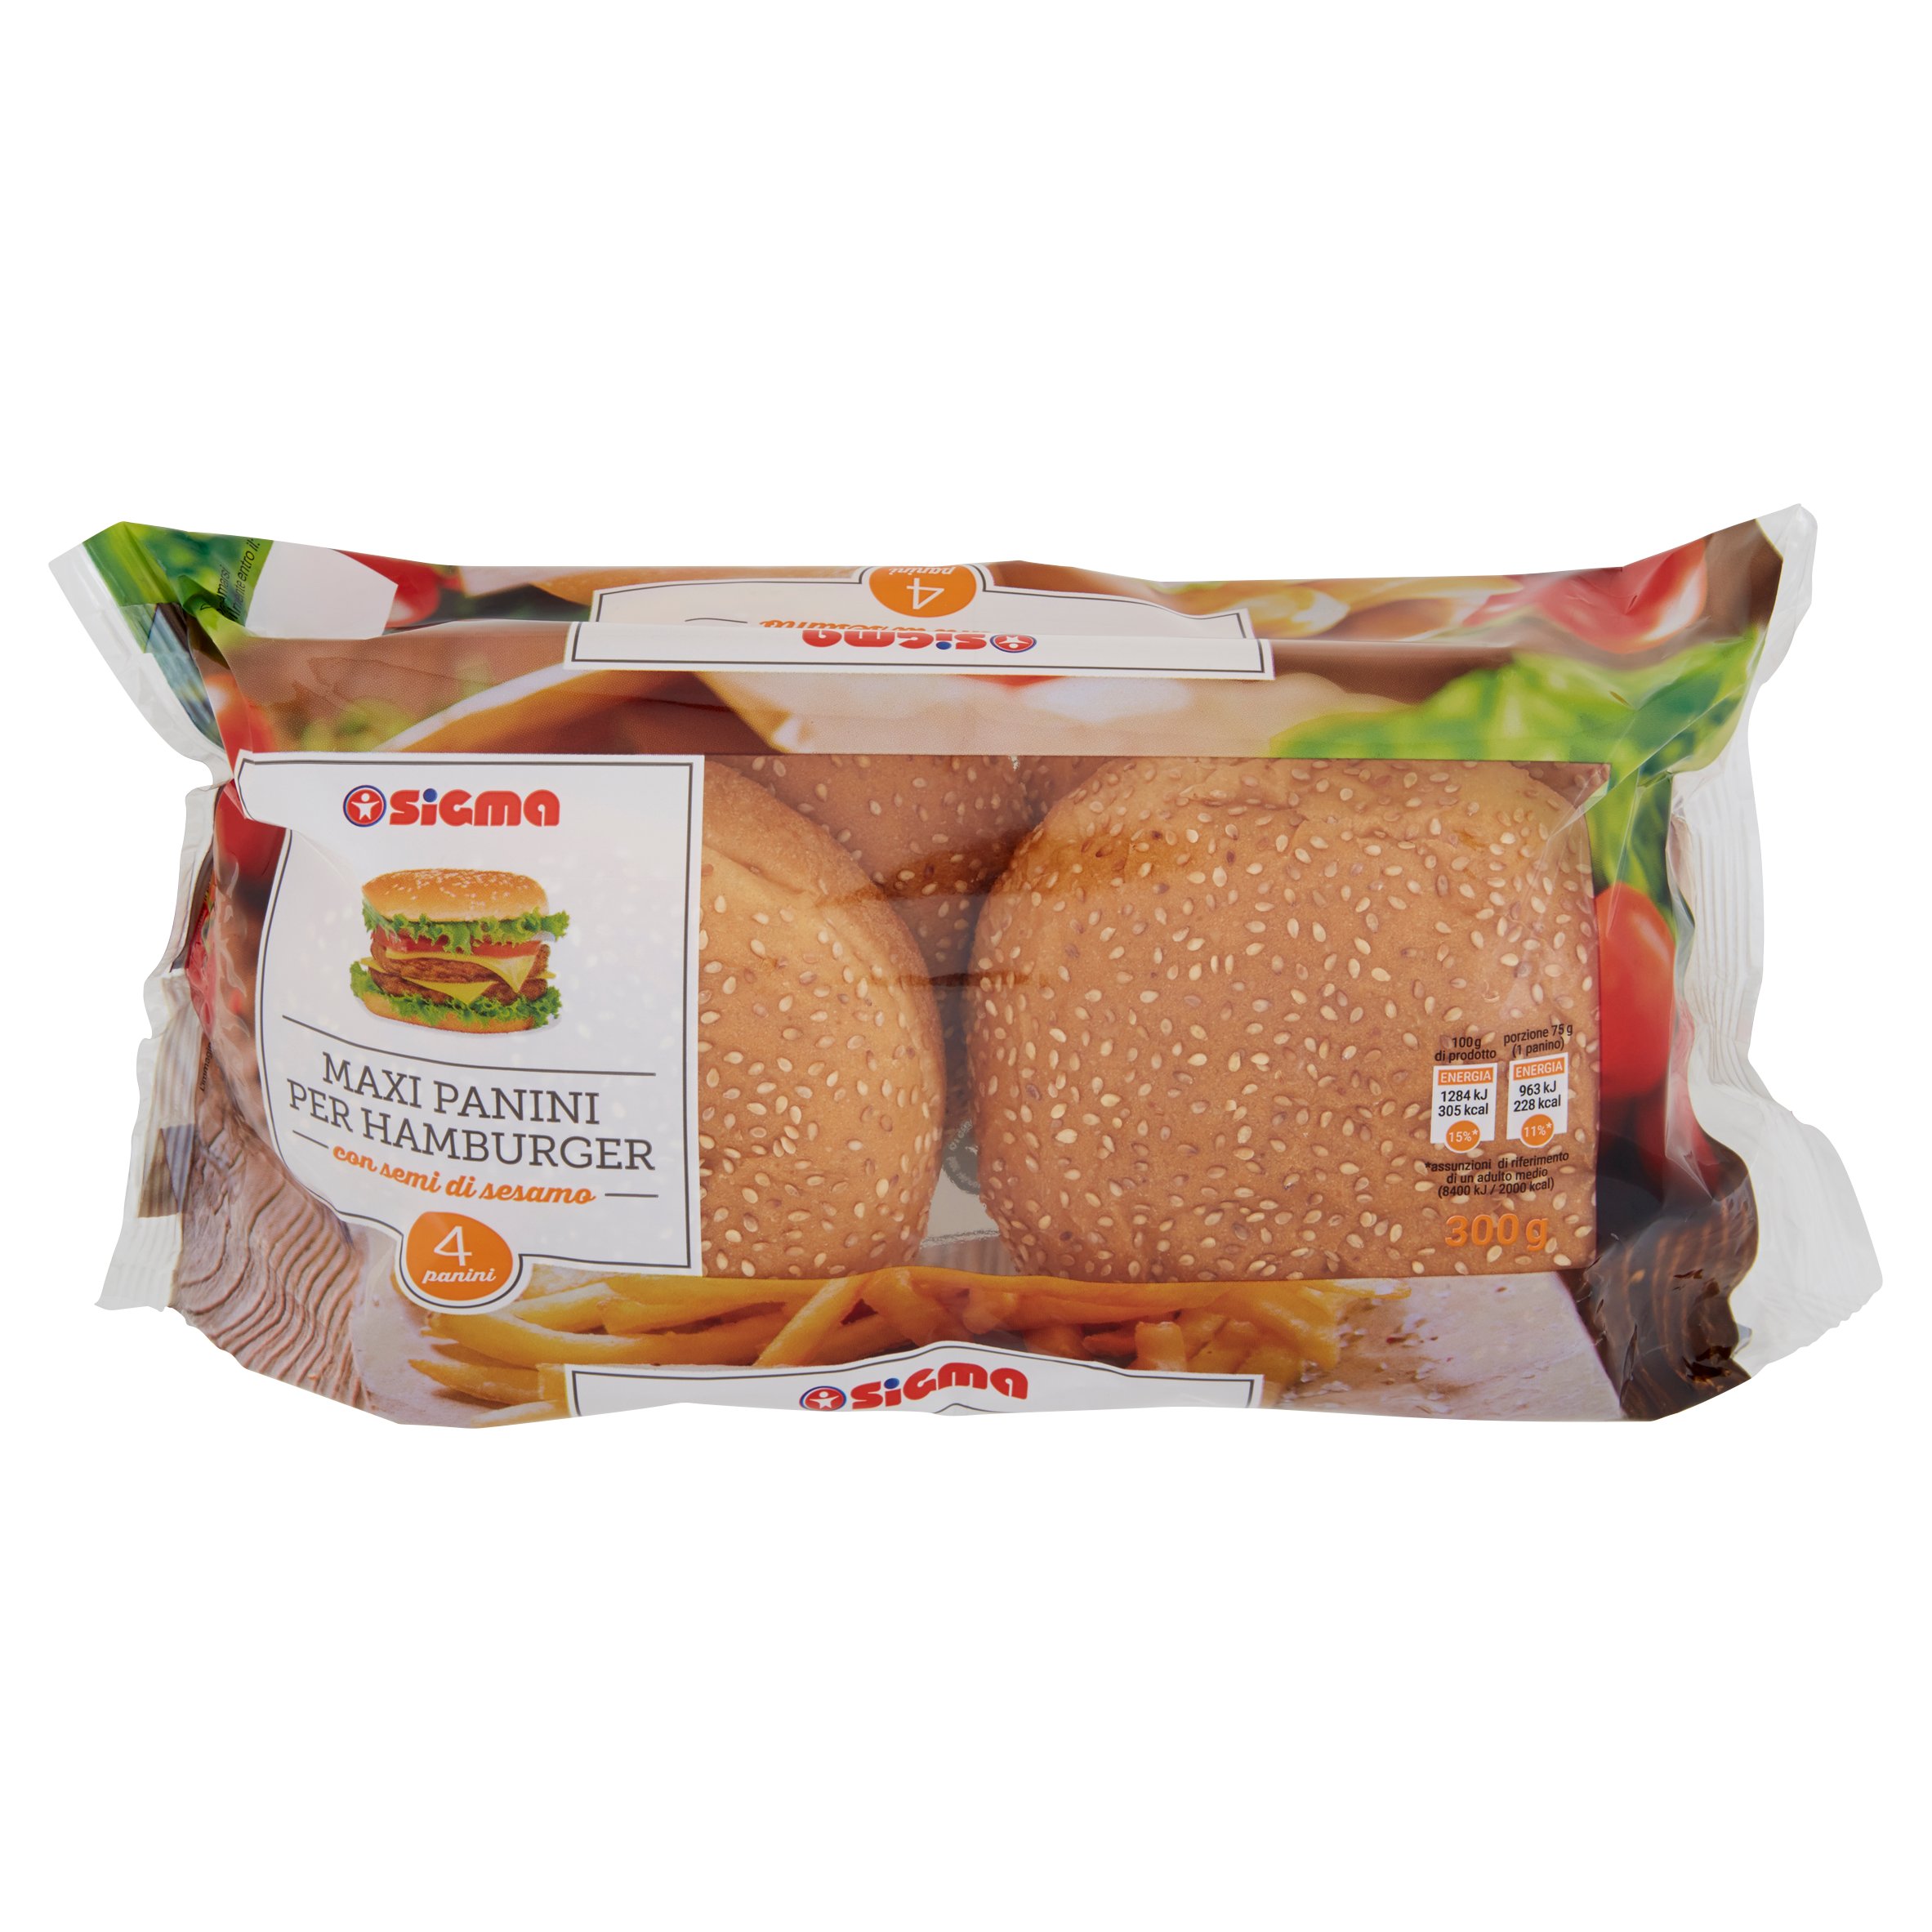 Panini Per Maxi Hamburger Con Semi Di Sesamo 4 X 75 G - Easycoop